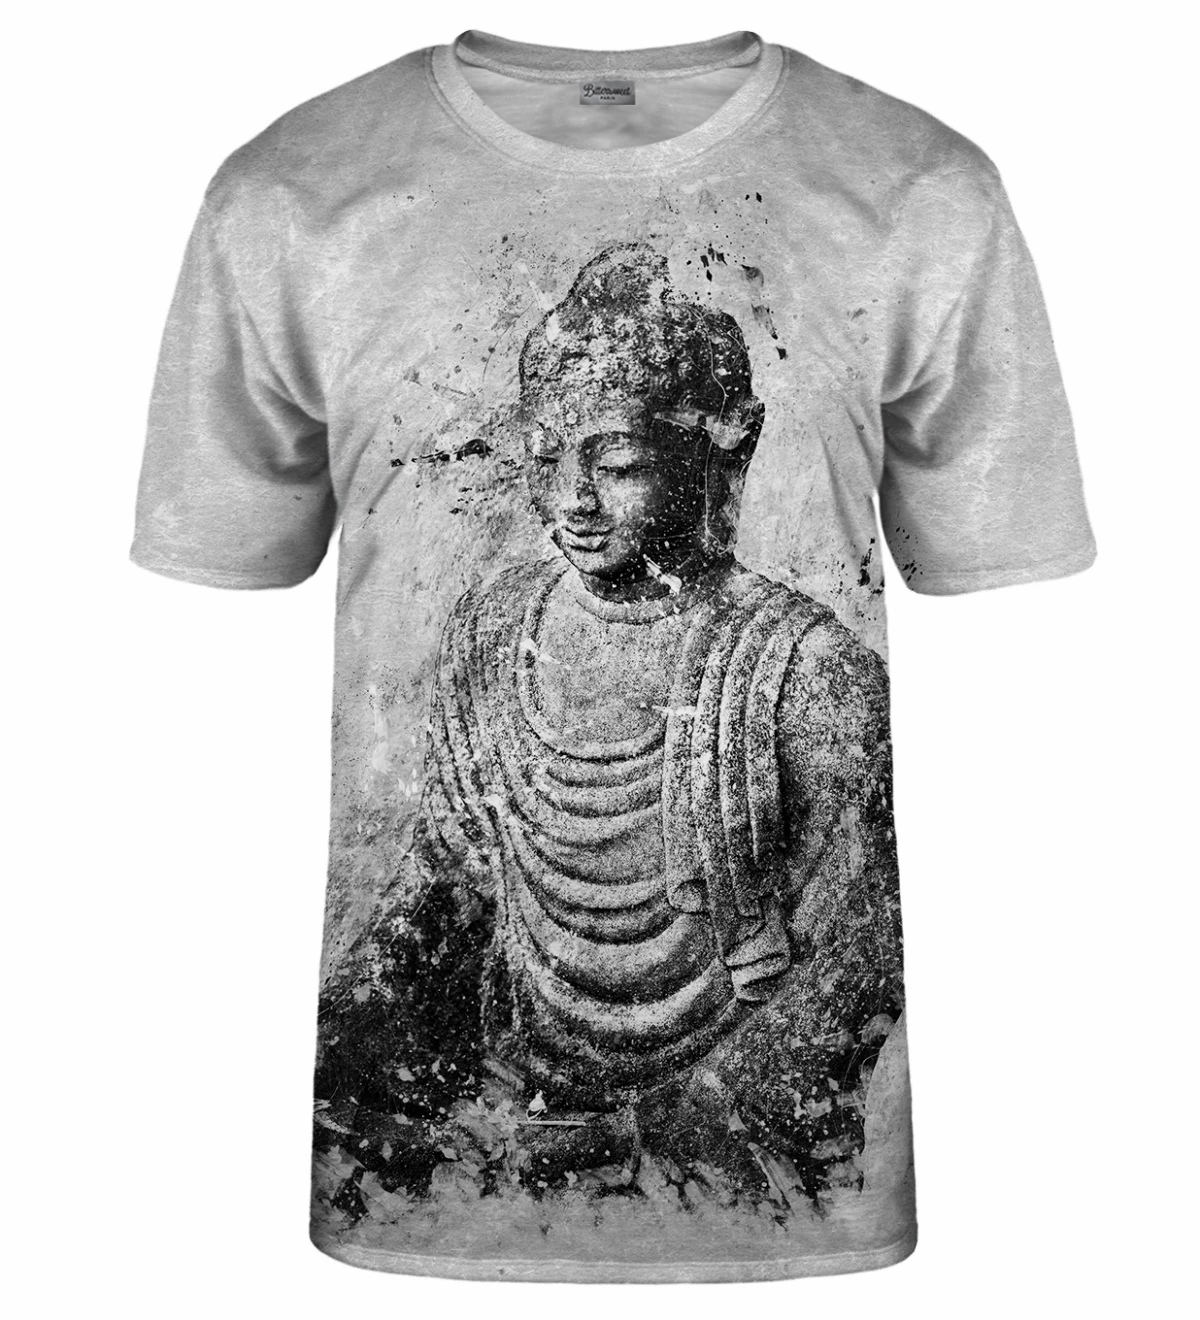 Ja Anklage Sukkerrør Buddha t-shirt - Bittersweet Paris